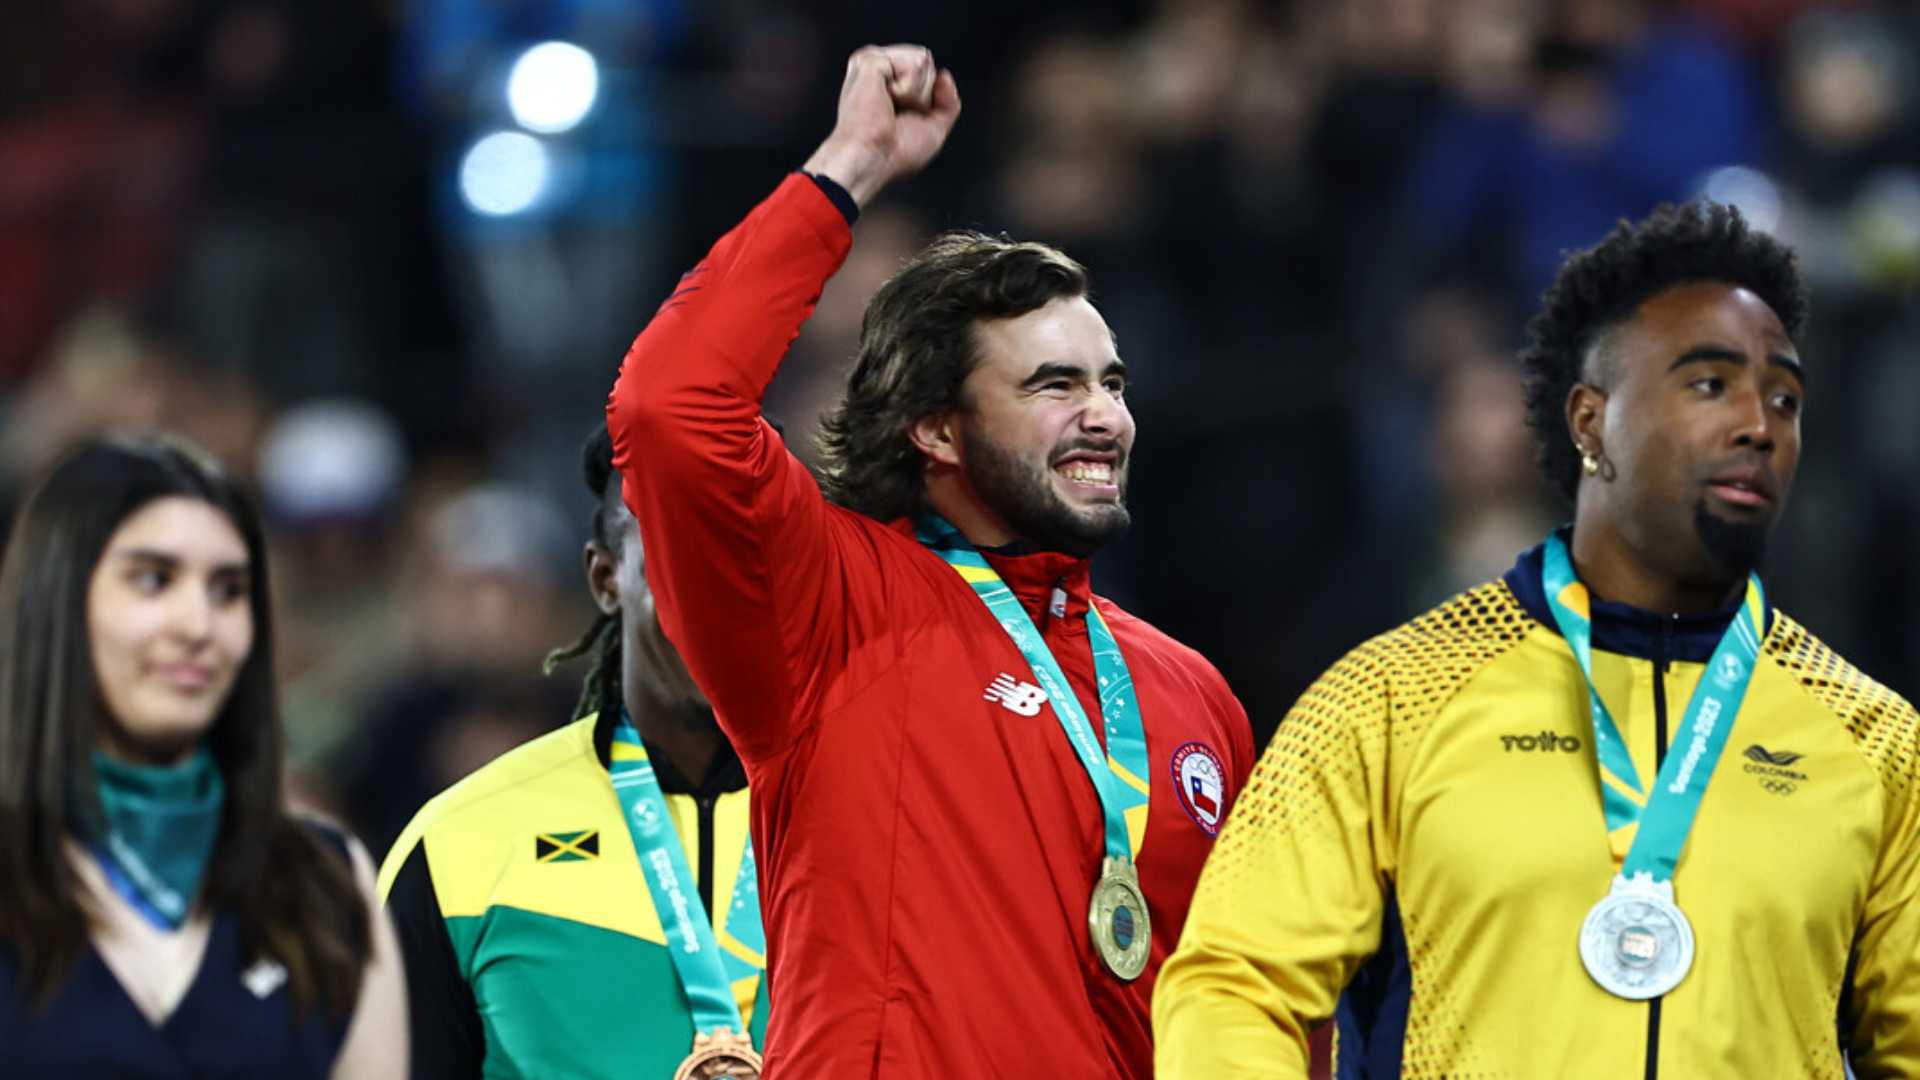 Resumen del Team Chile: Nervi rescató la tan ansiada sexta medalla de oro